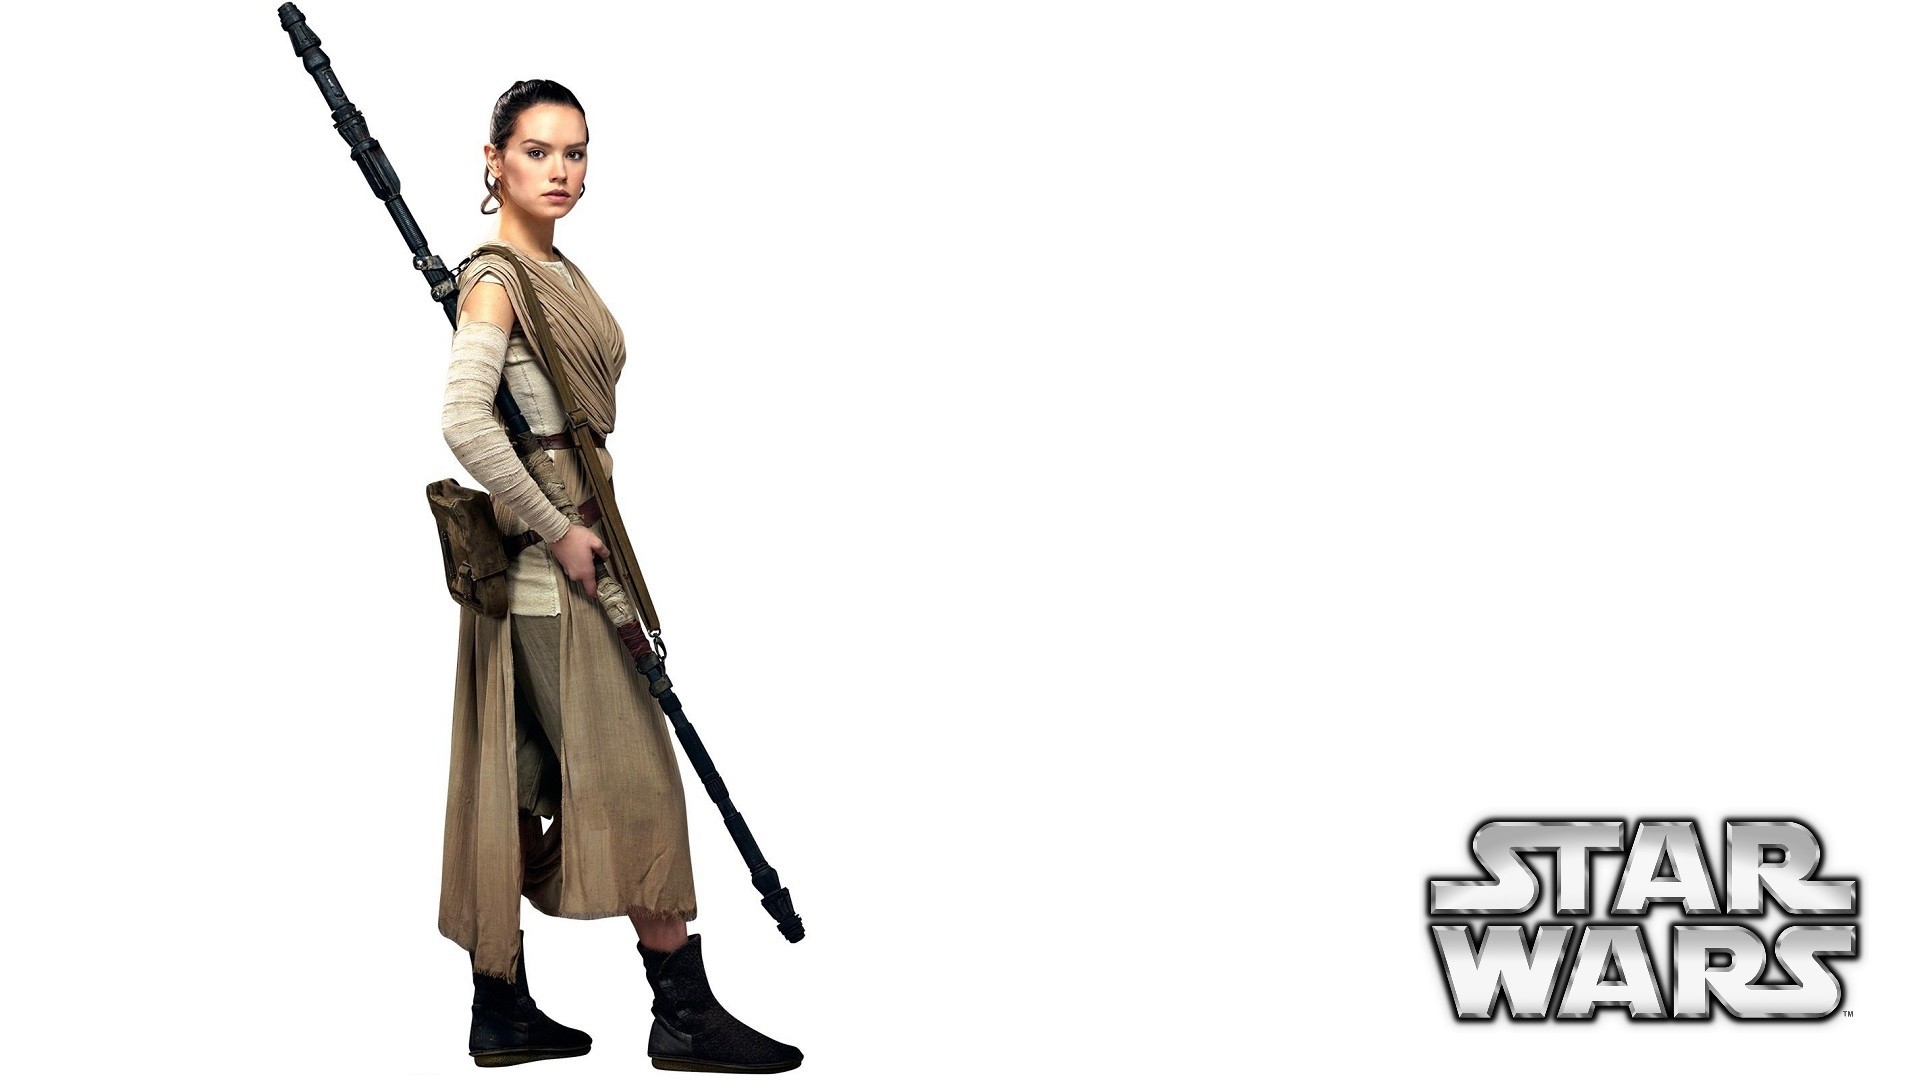 Star Wars – The Force Awakens Daisy Ridley / Rey wallpaper white 1080p